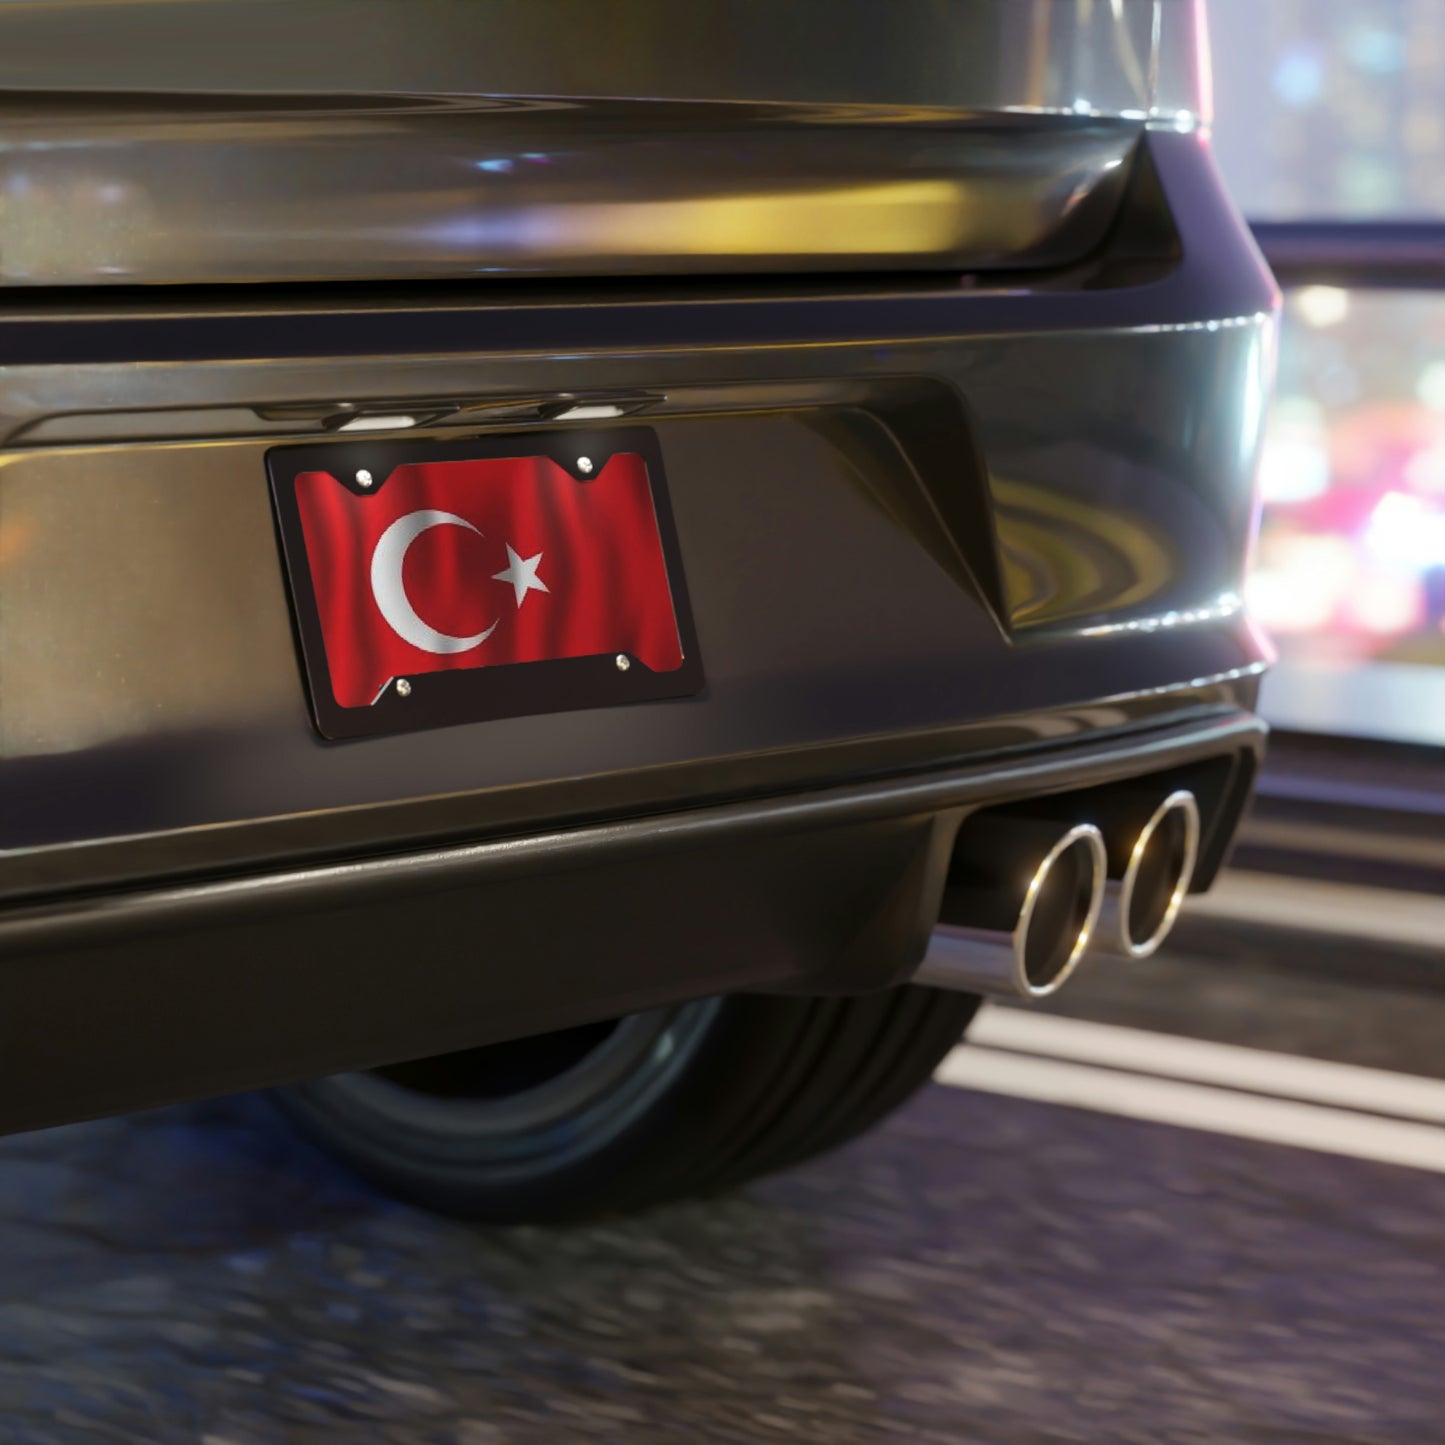 Waving Turkish Flag Vanity License Plate